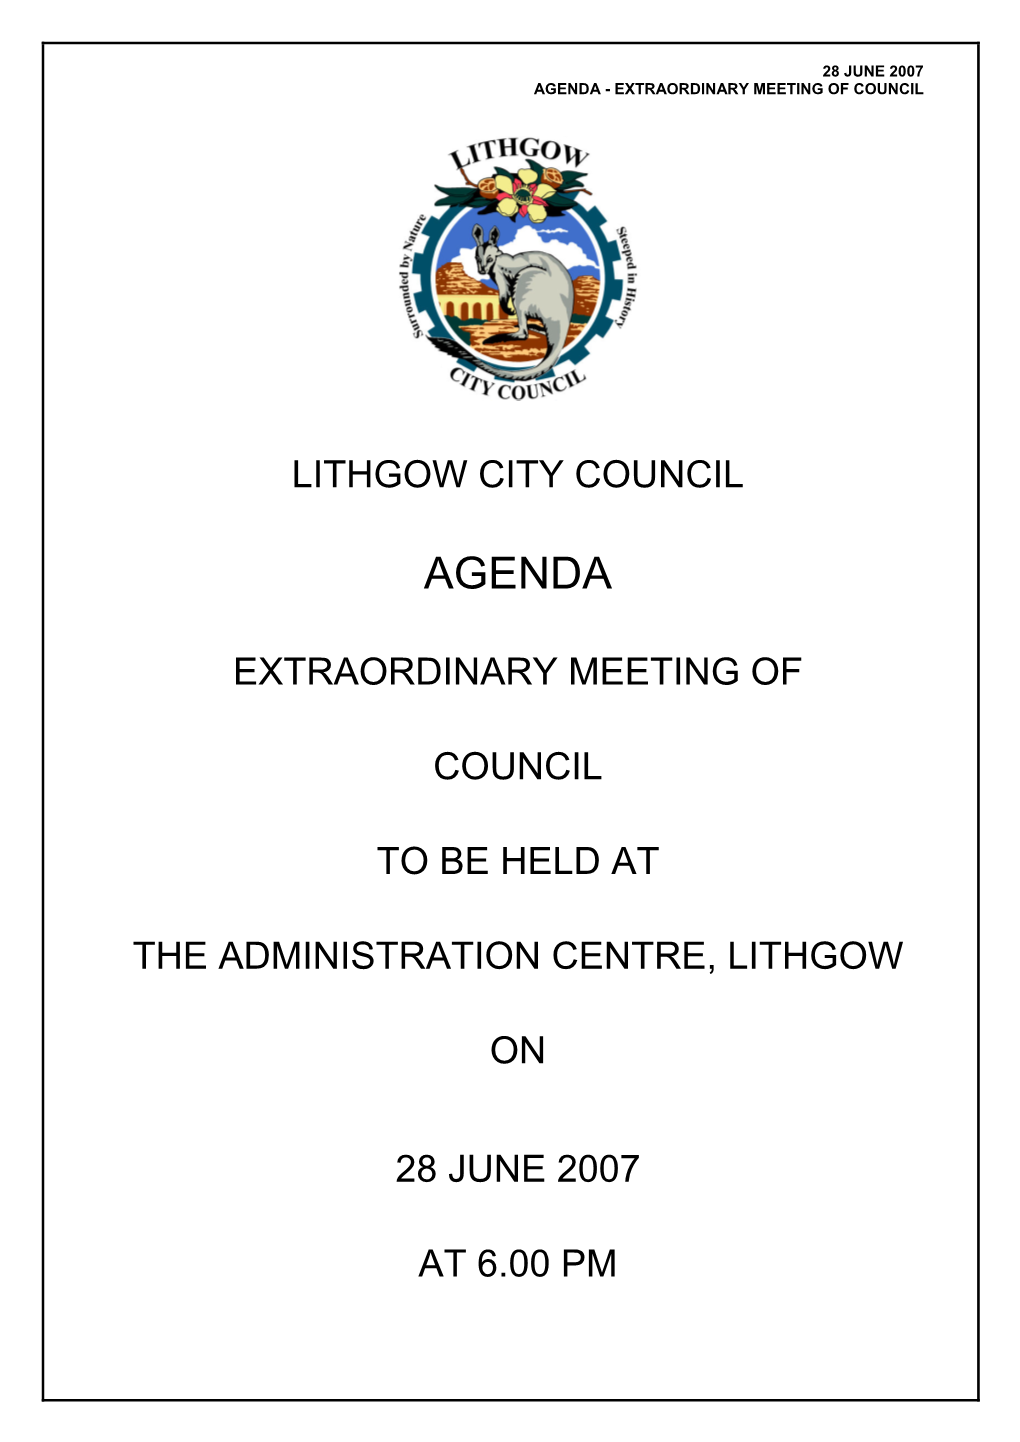 28 June 2007 Extraordinary Meeting